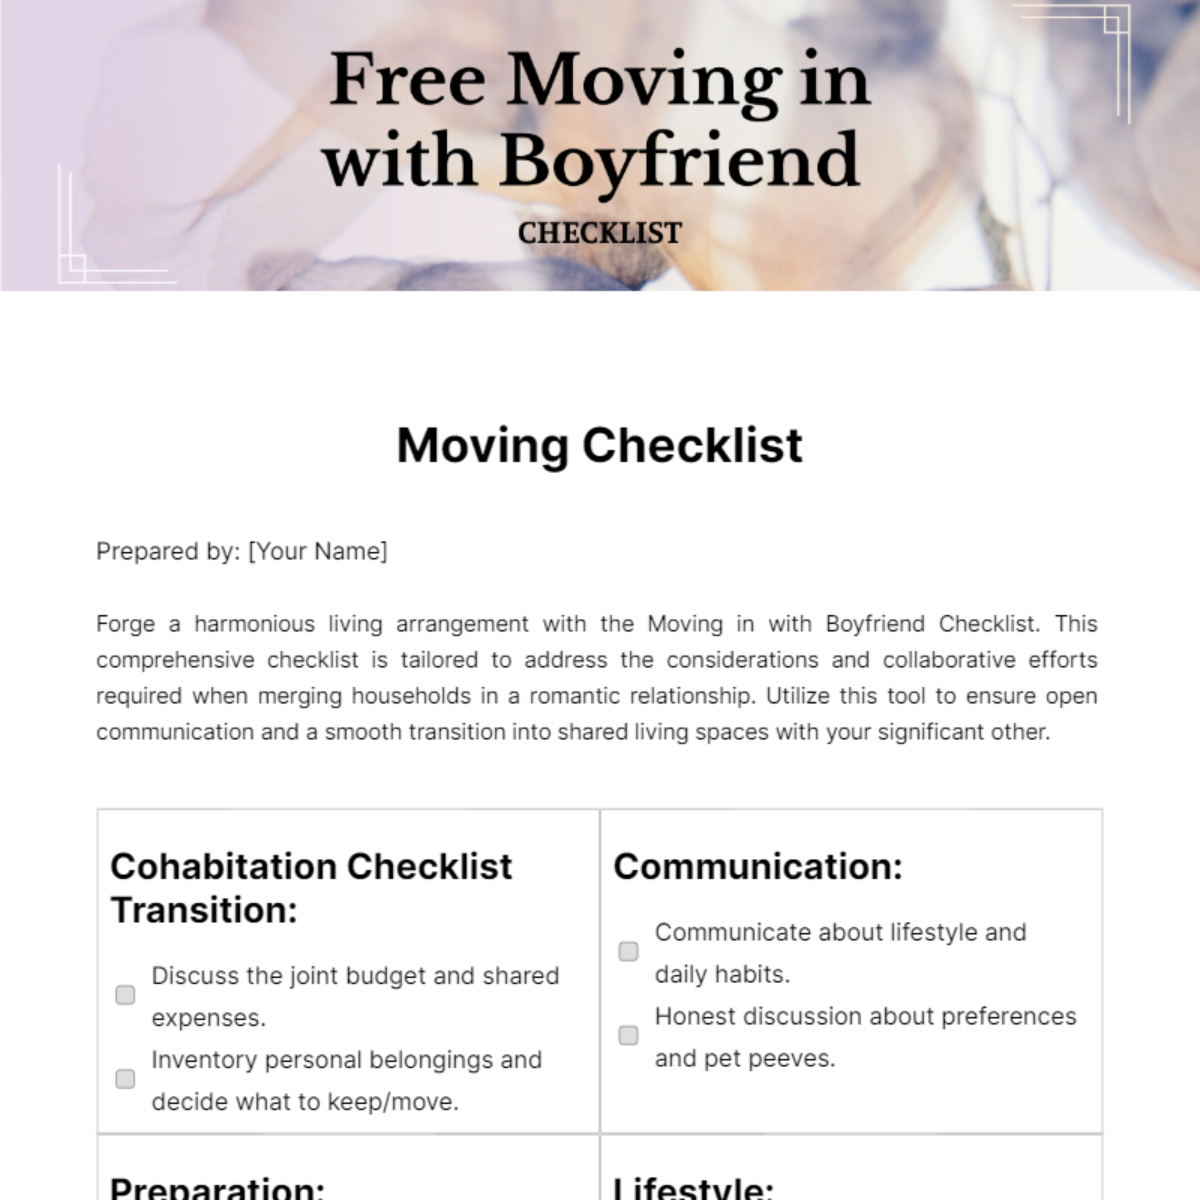 Moving in with Boyfriend Checklist Template